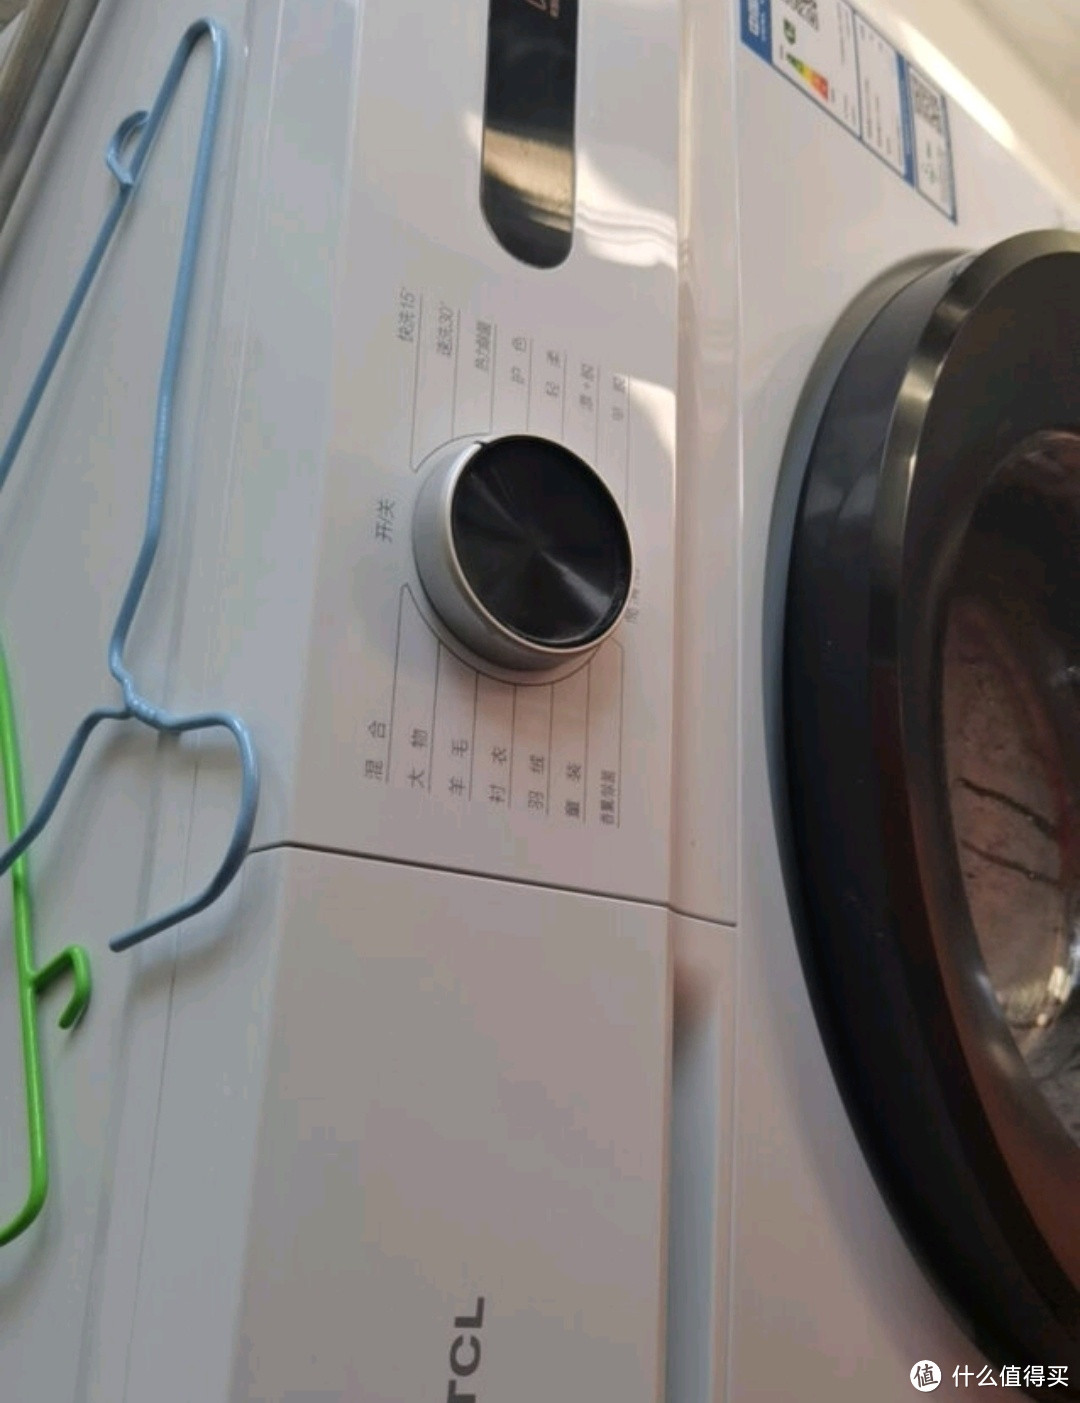  TCL10升滚筒洗衣机。